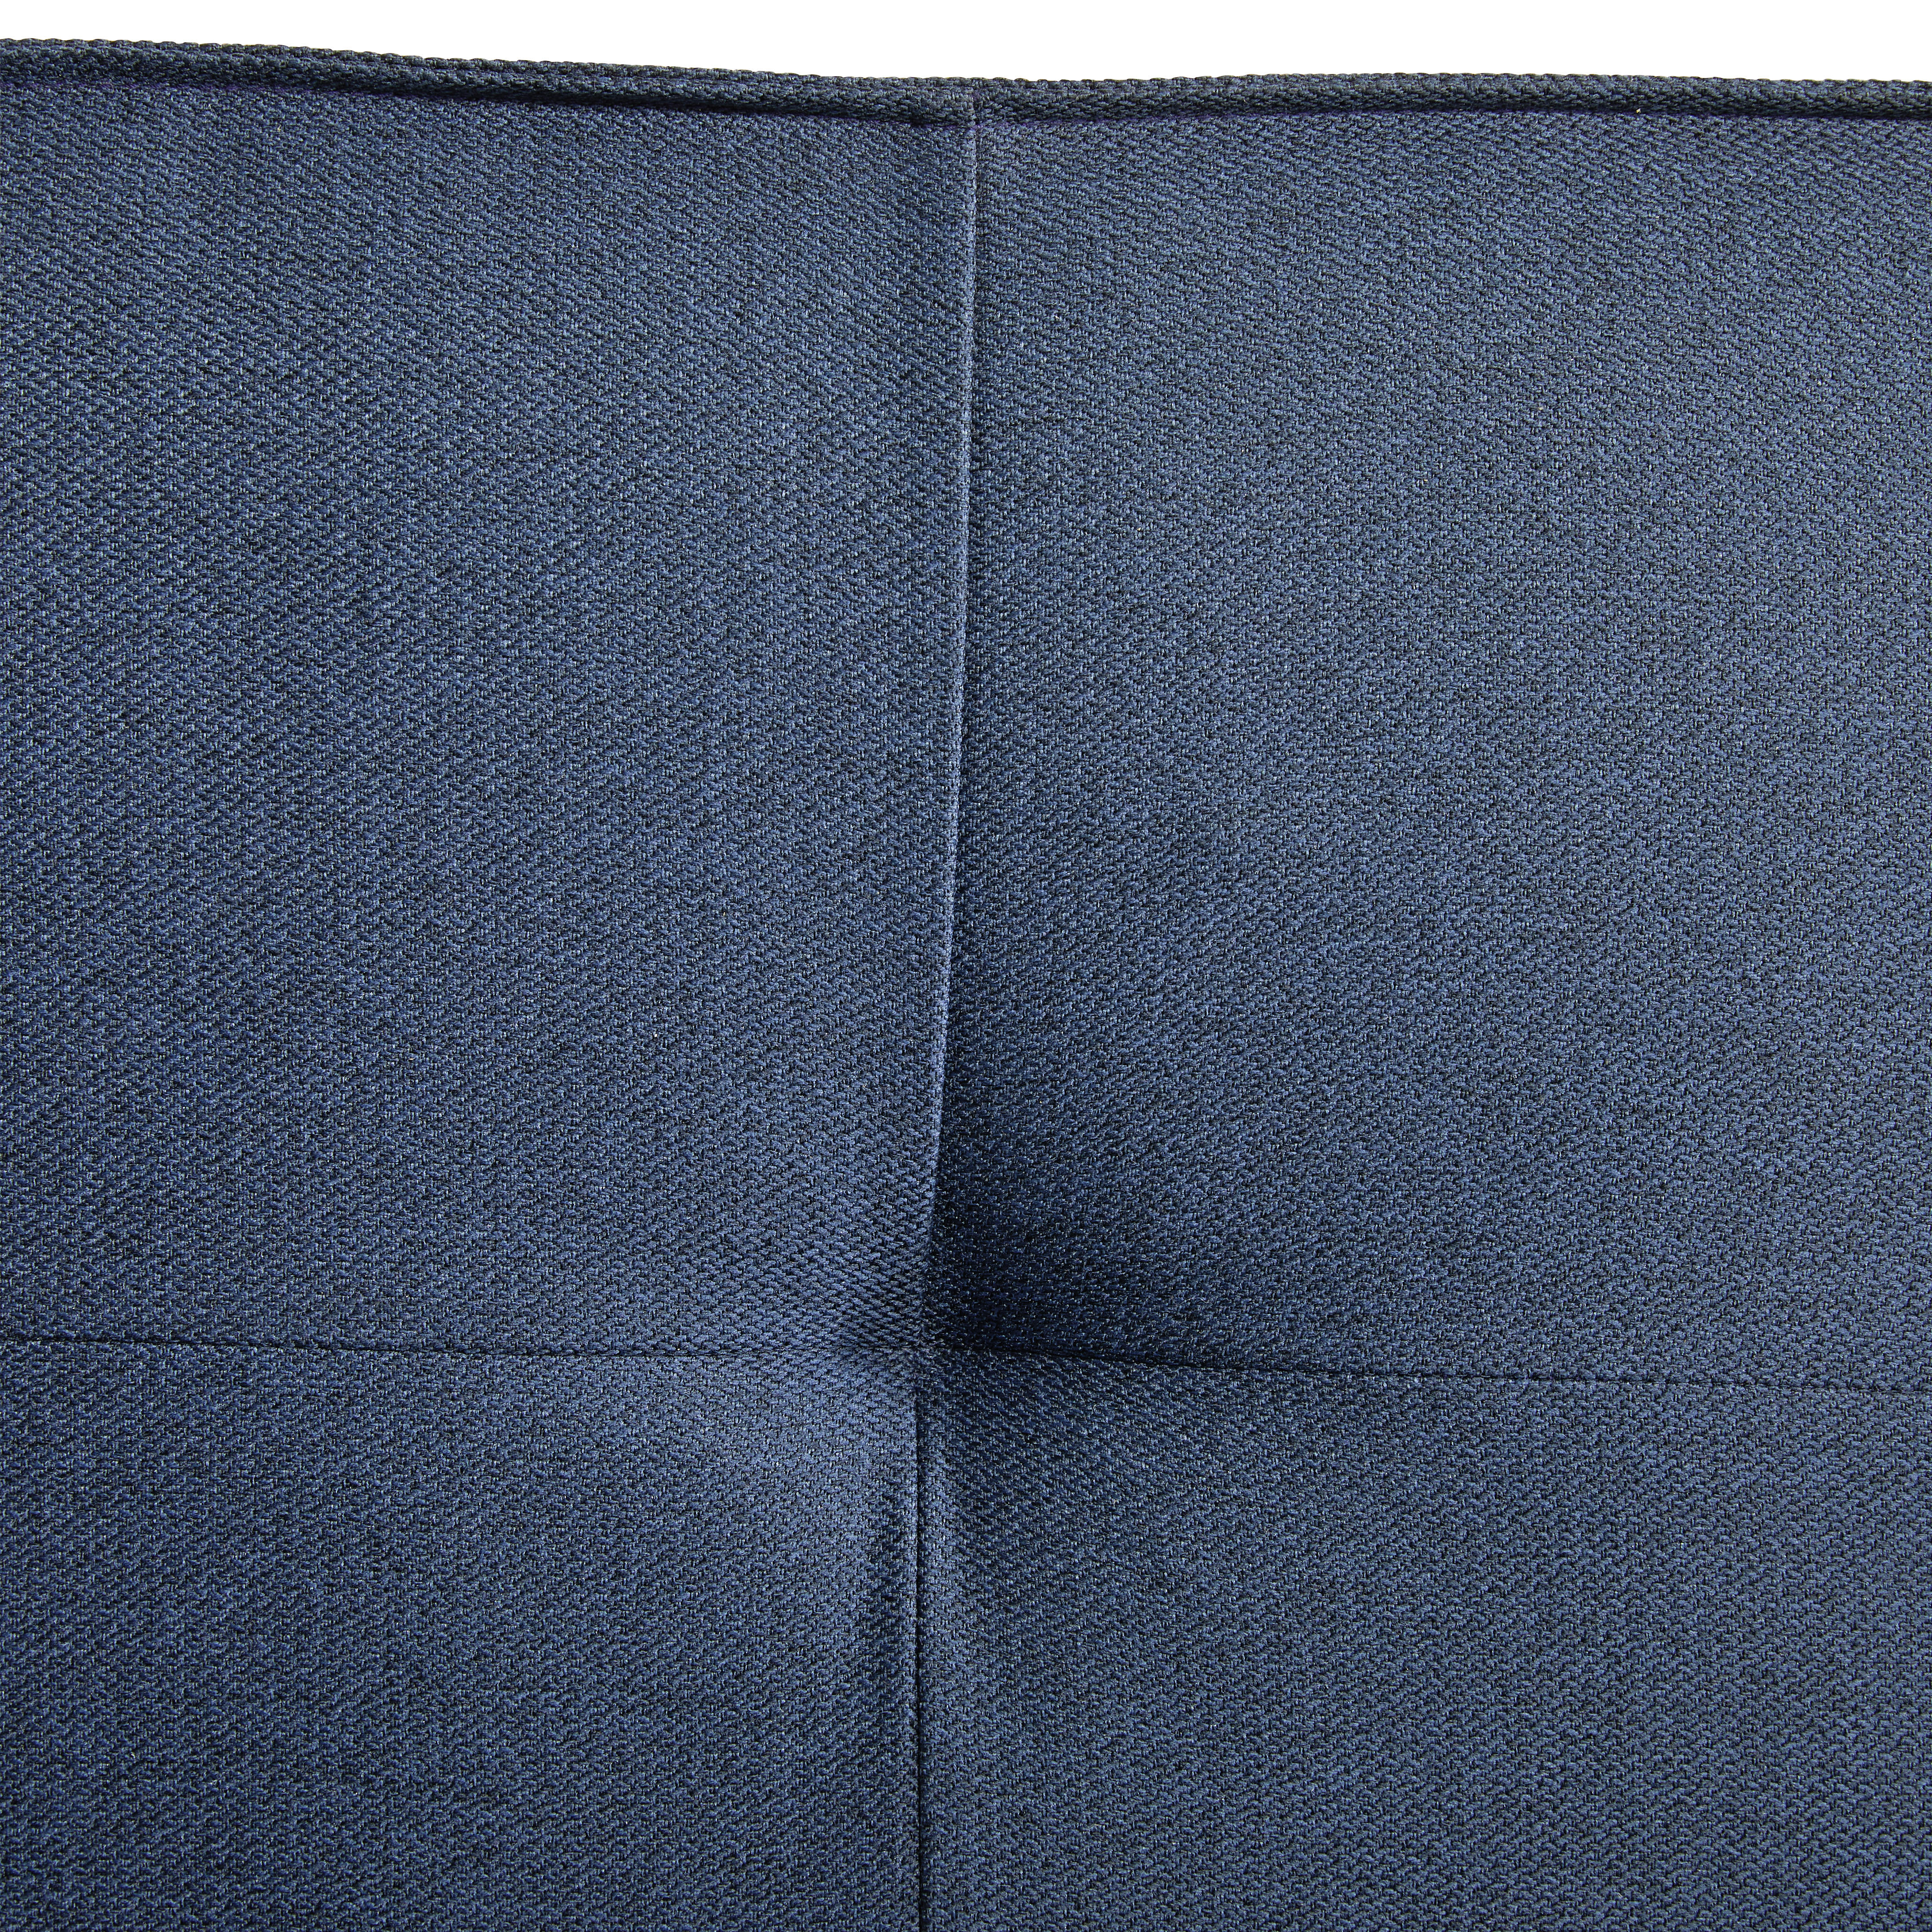 SCHLAFSESSEL in Webstoff Blau  - Blau, KONVENTIONELL, Textil/Metall (70/57/76cm) - MID.YOU